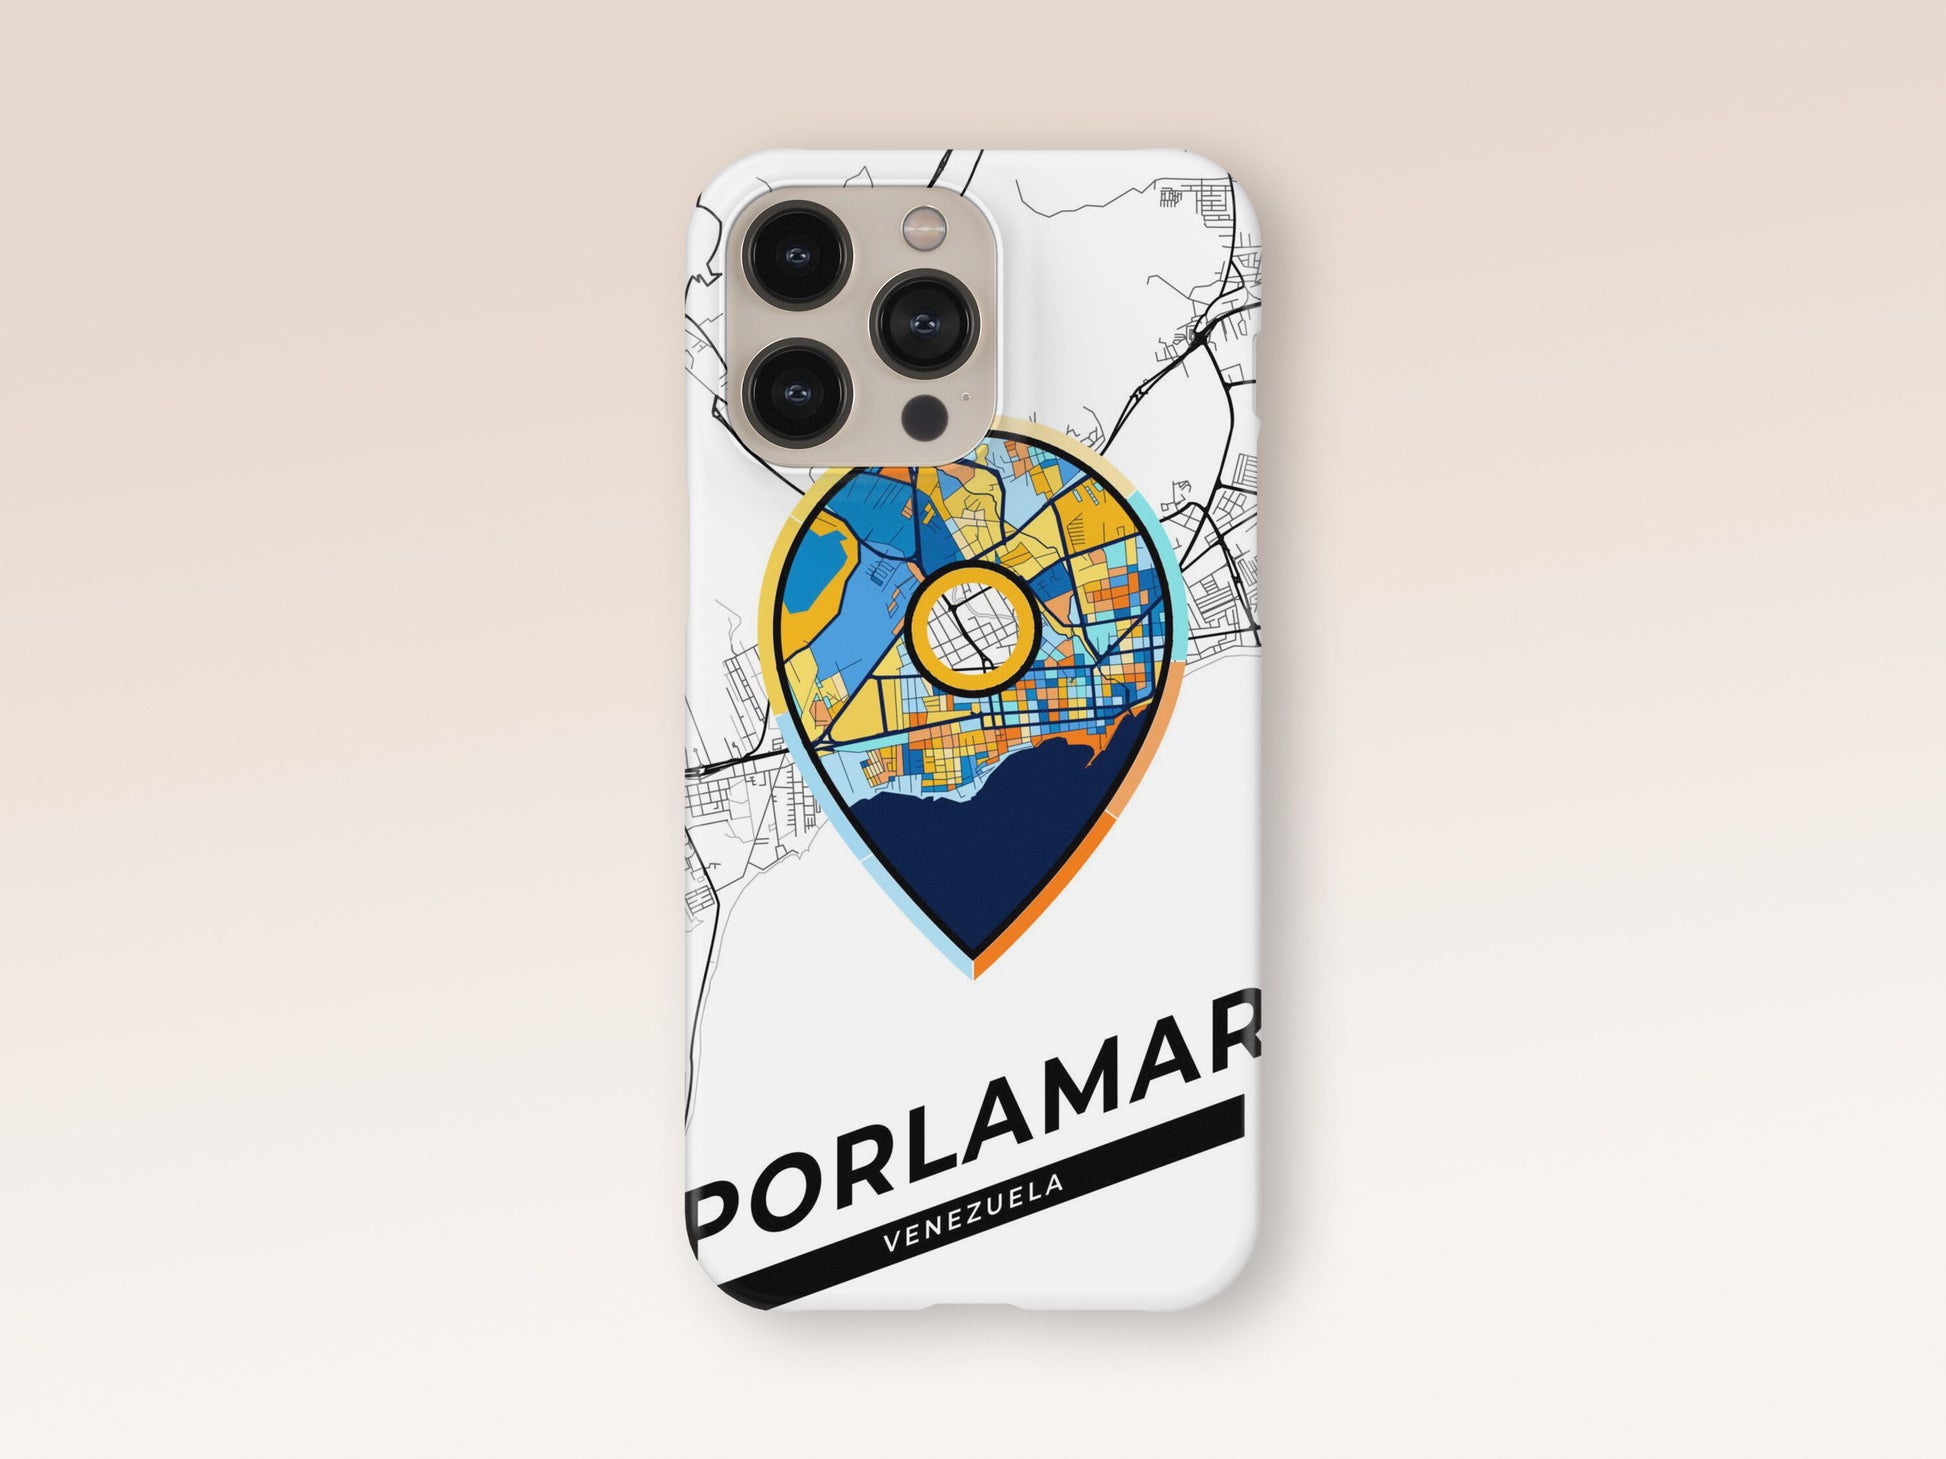 Porlamar Venezuela slim phone case with colorful icon 1